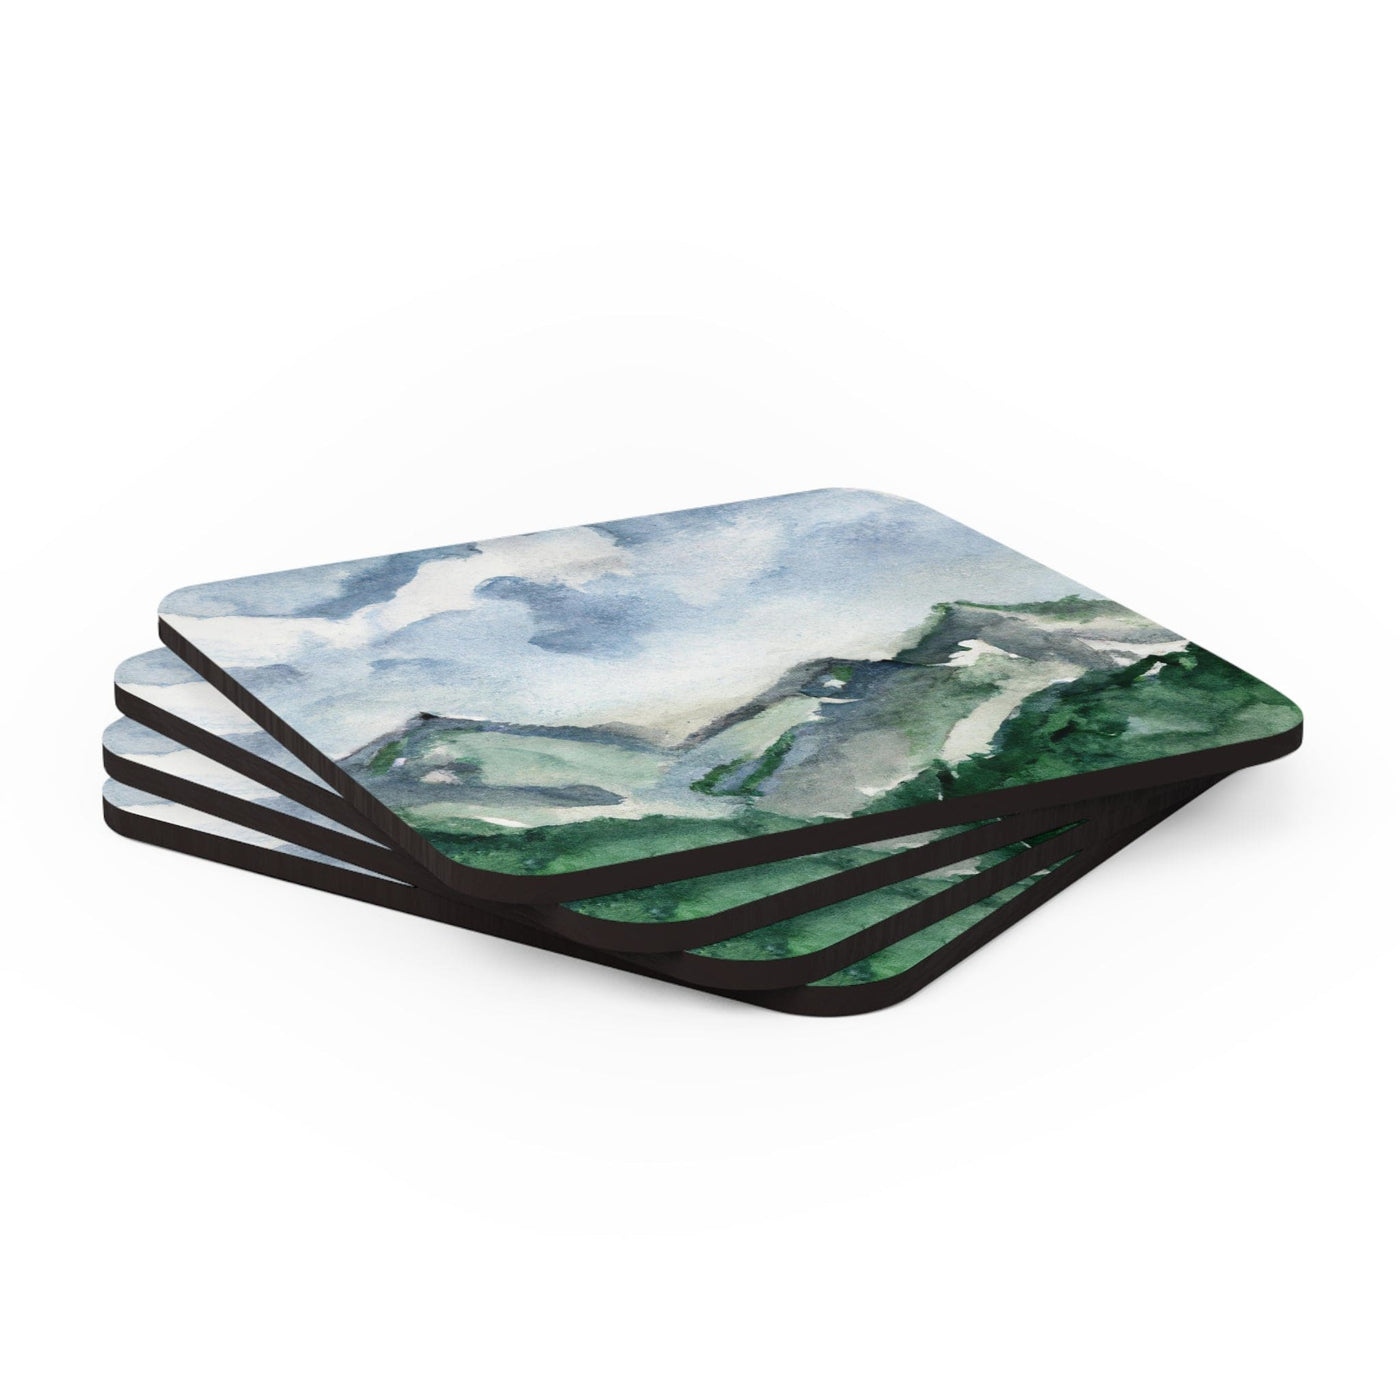 Coaster Set Of 4 For Drinks Green Mountainside Nature Landscape Blue Sky Print